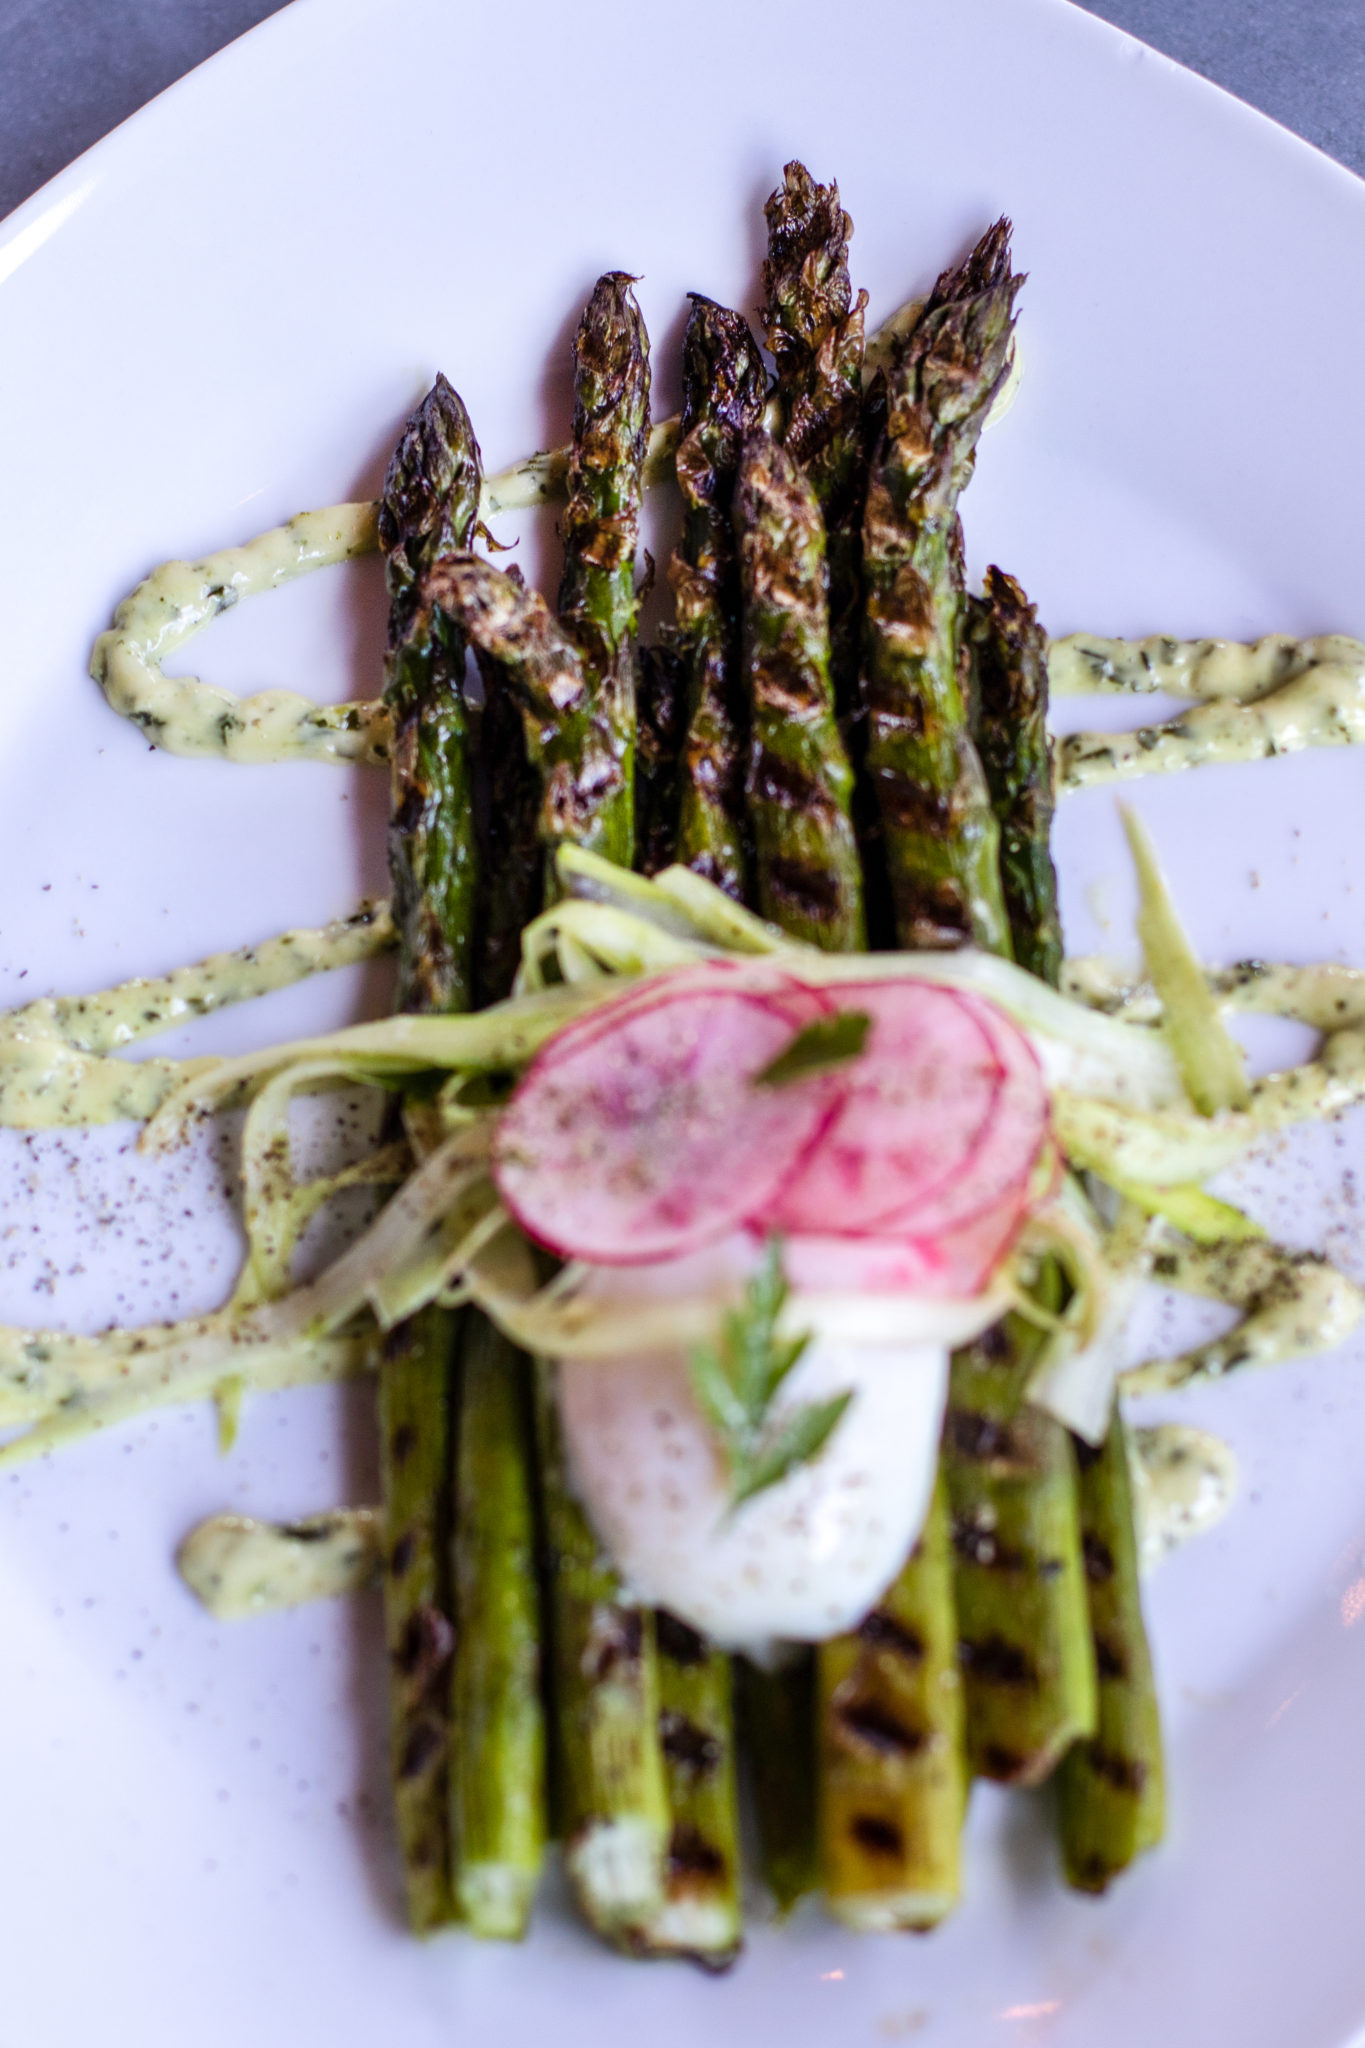 Warm asparagus salad at Coyote Sonoma in Healdsburg. (Heather Irwin / The Press Democrat)